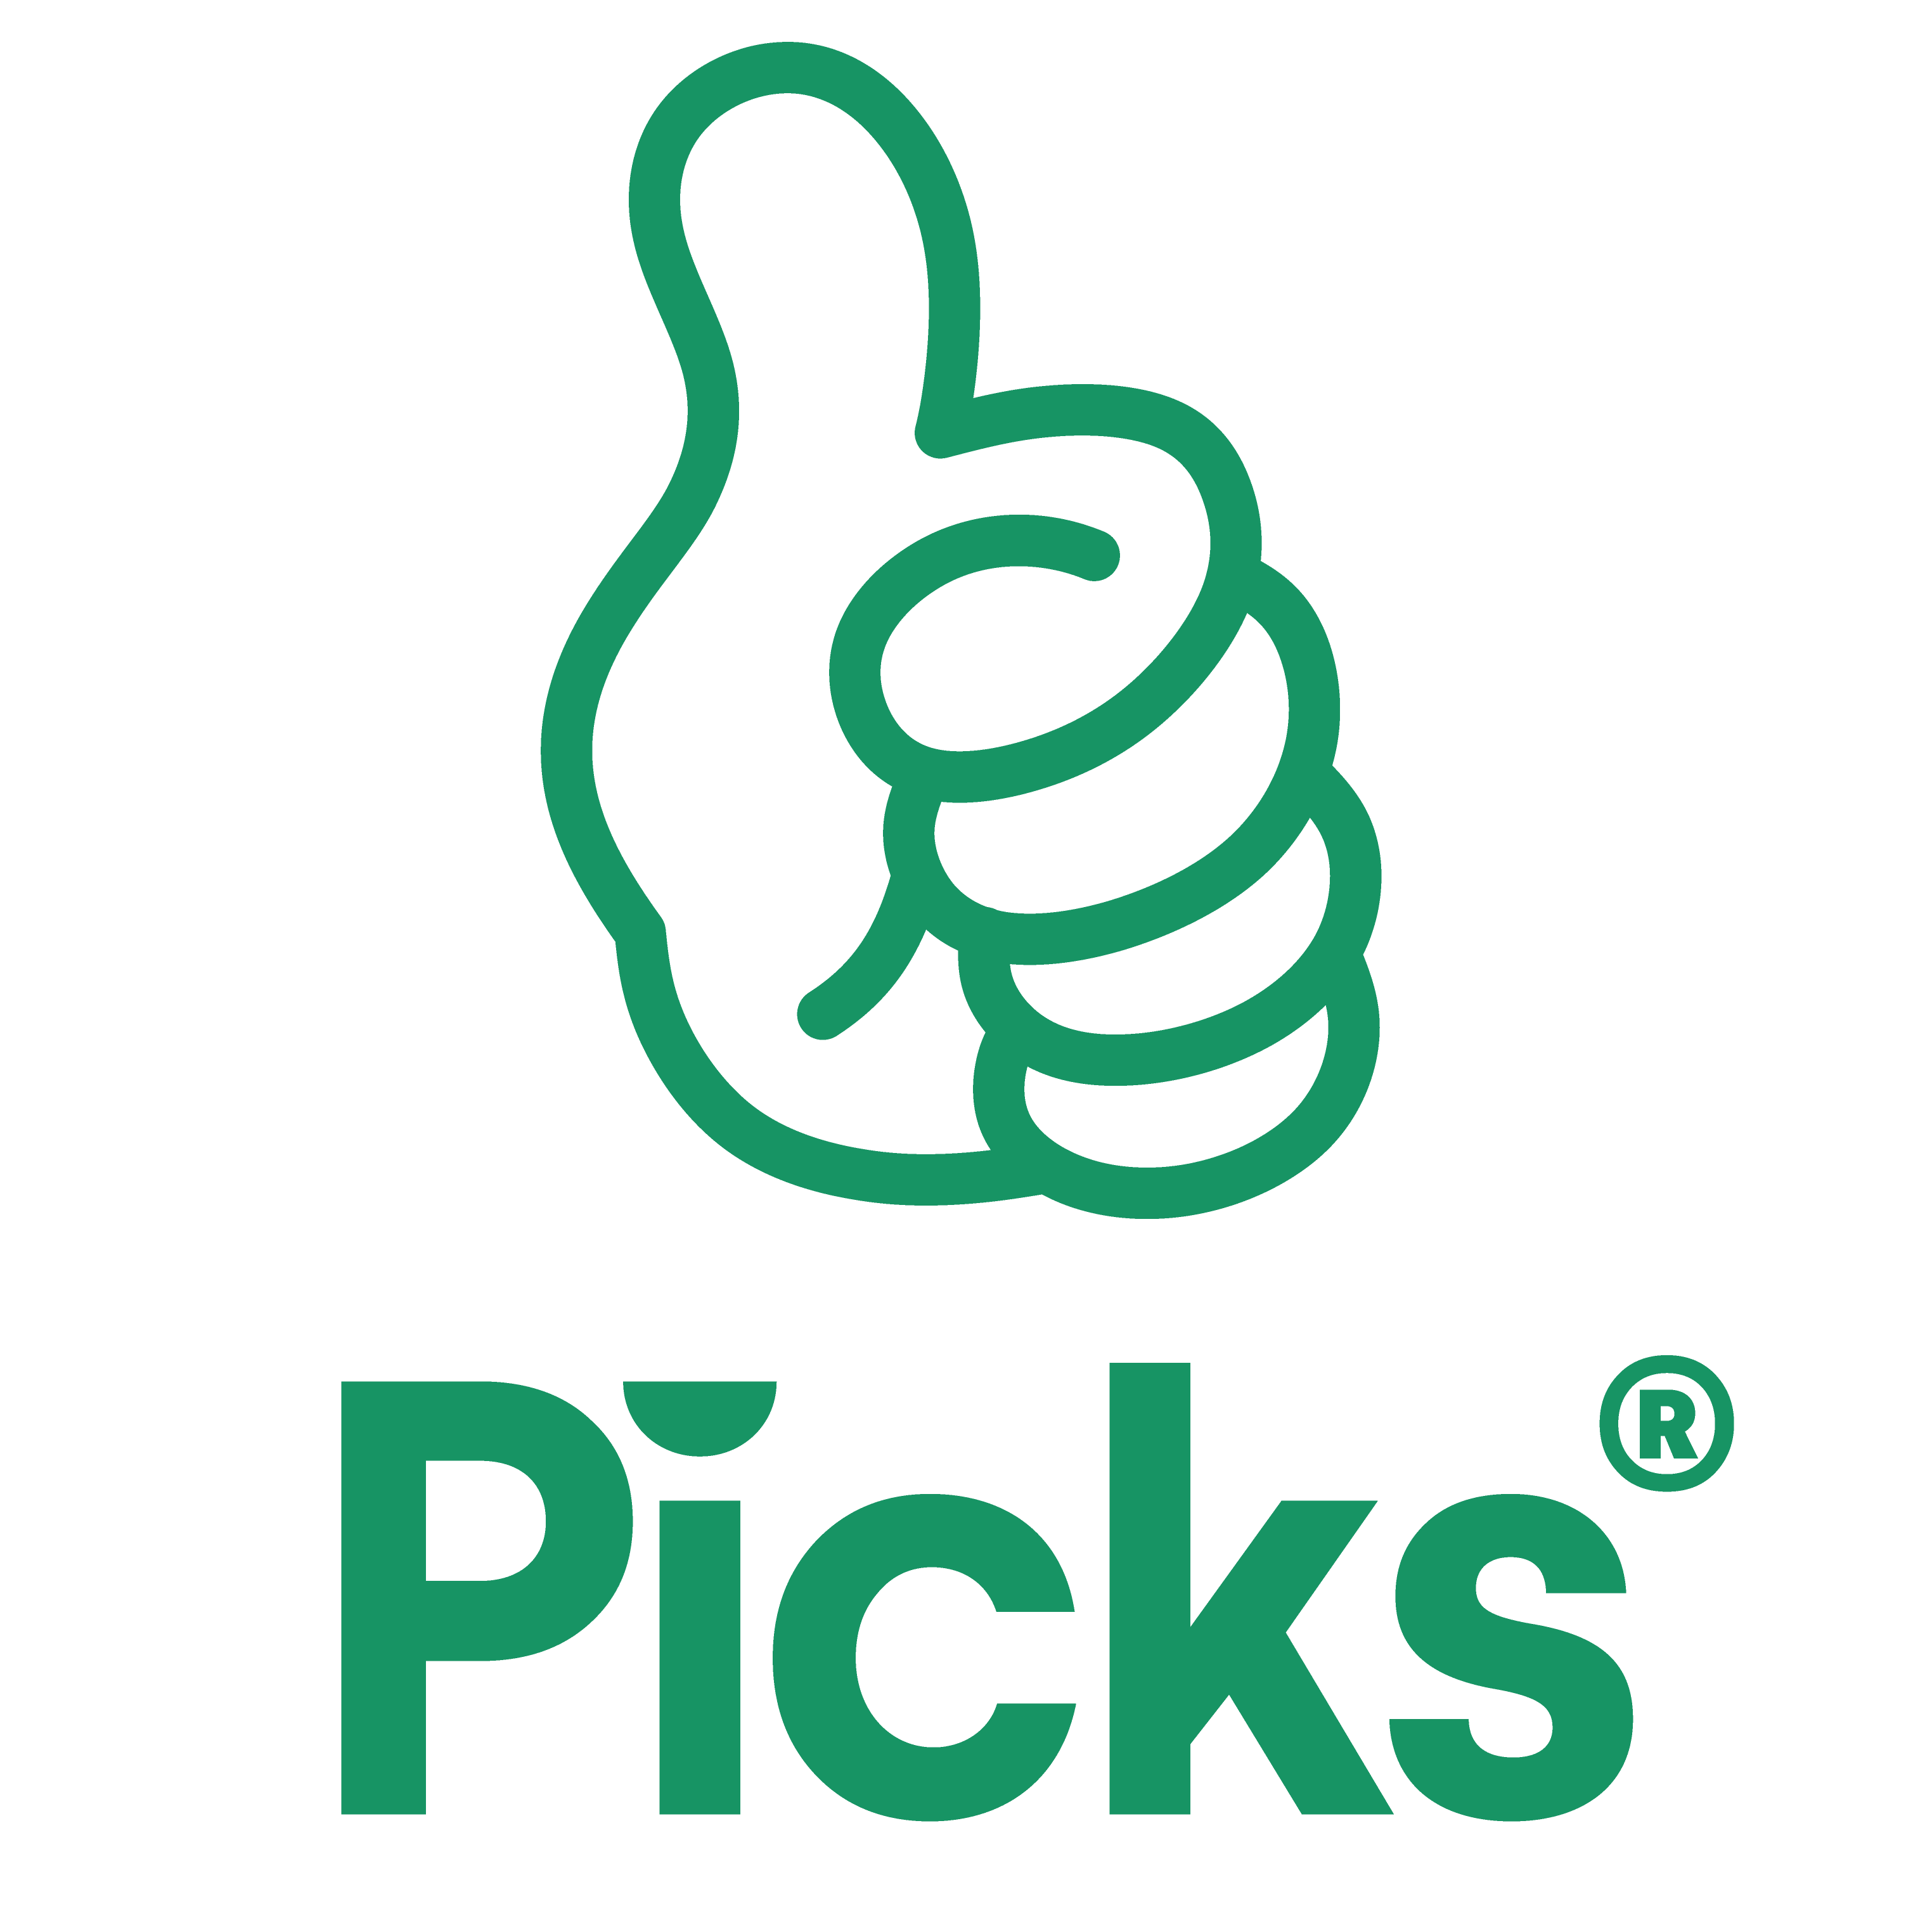 Picks